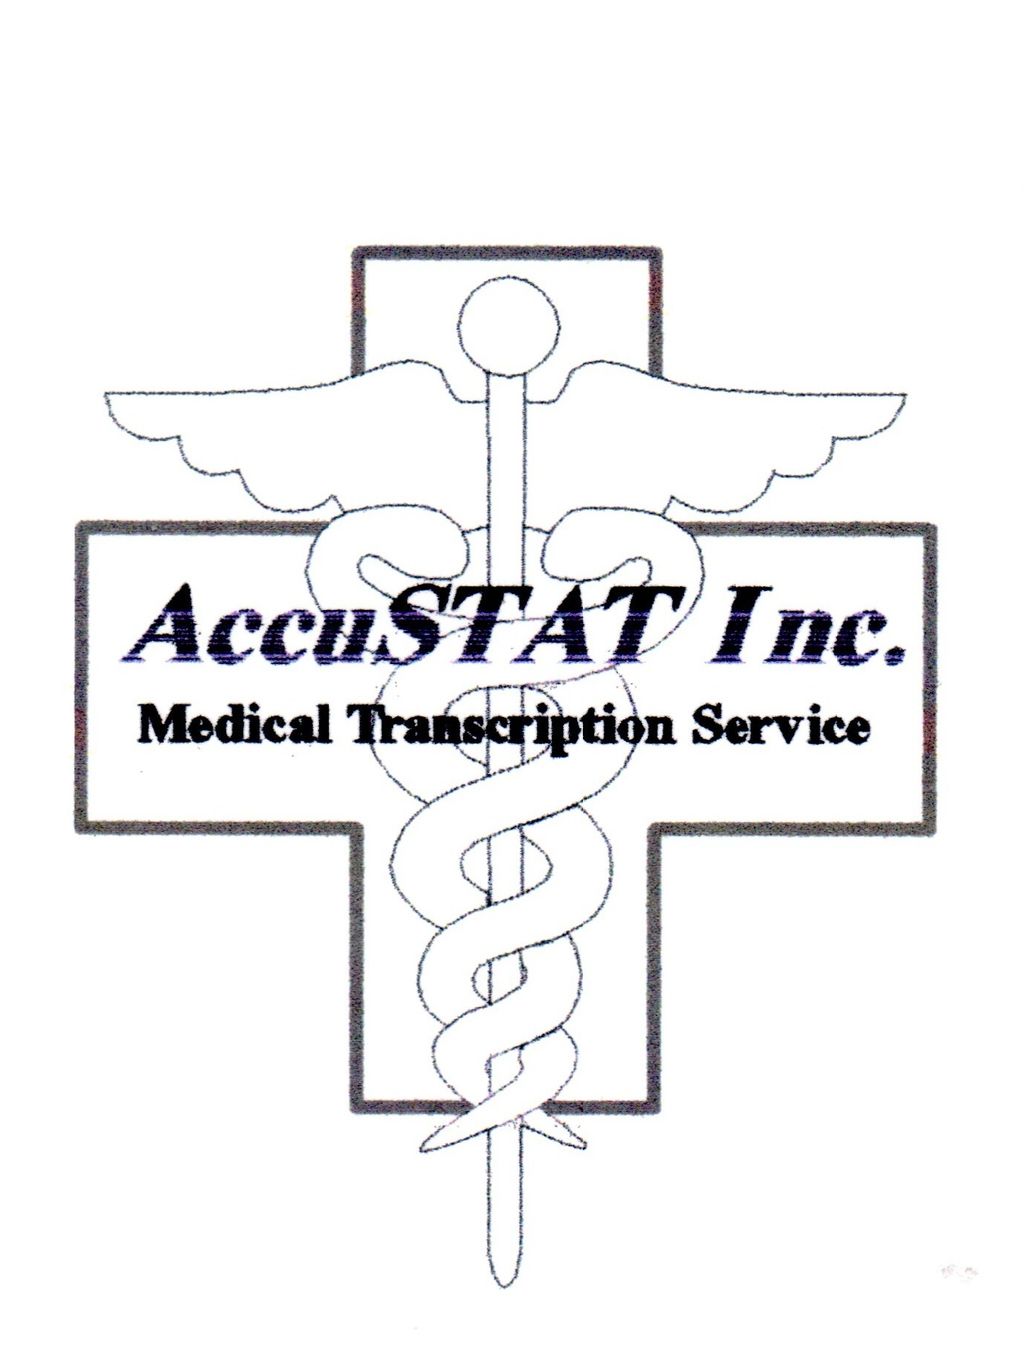 AccuSTAT Medical Transcription Service, Inc.